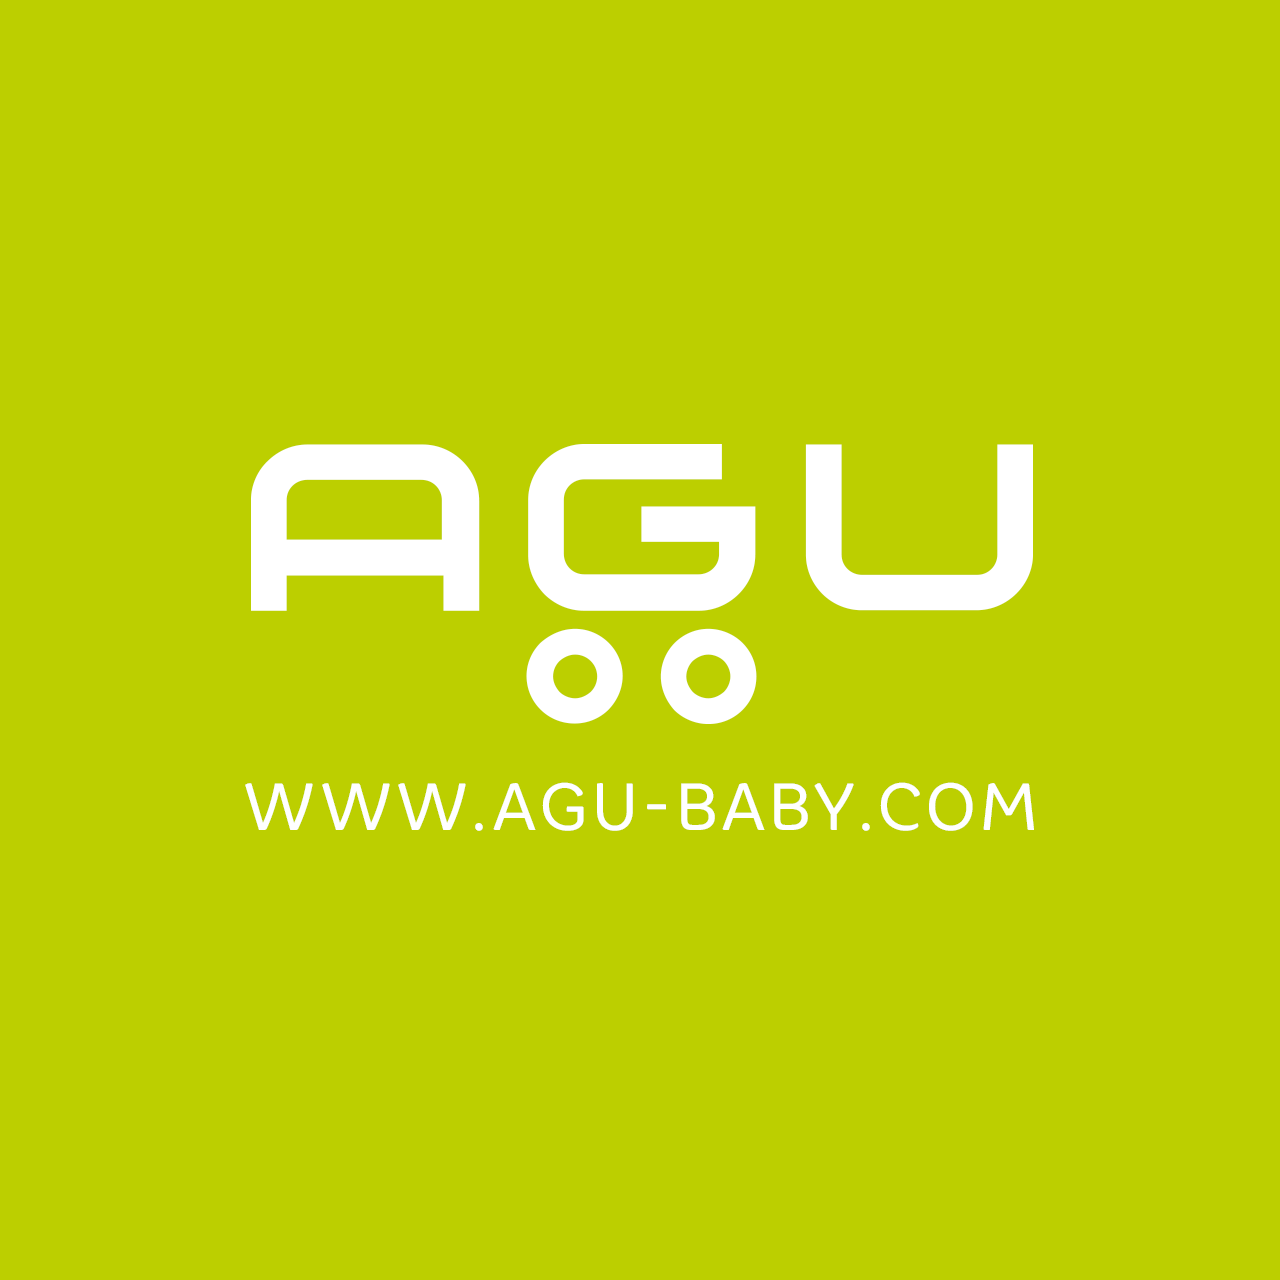 Корпоративный сайт бренда AGU